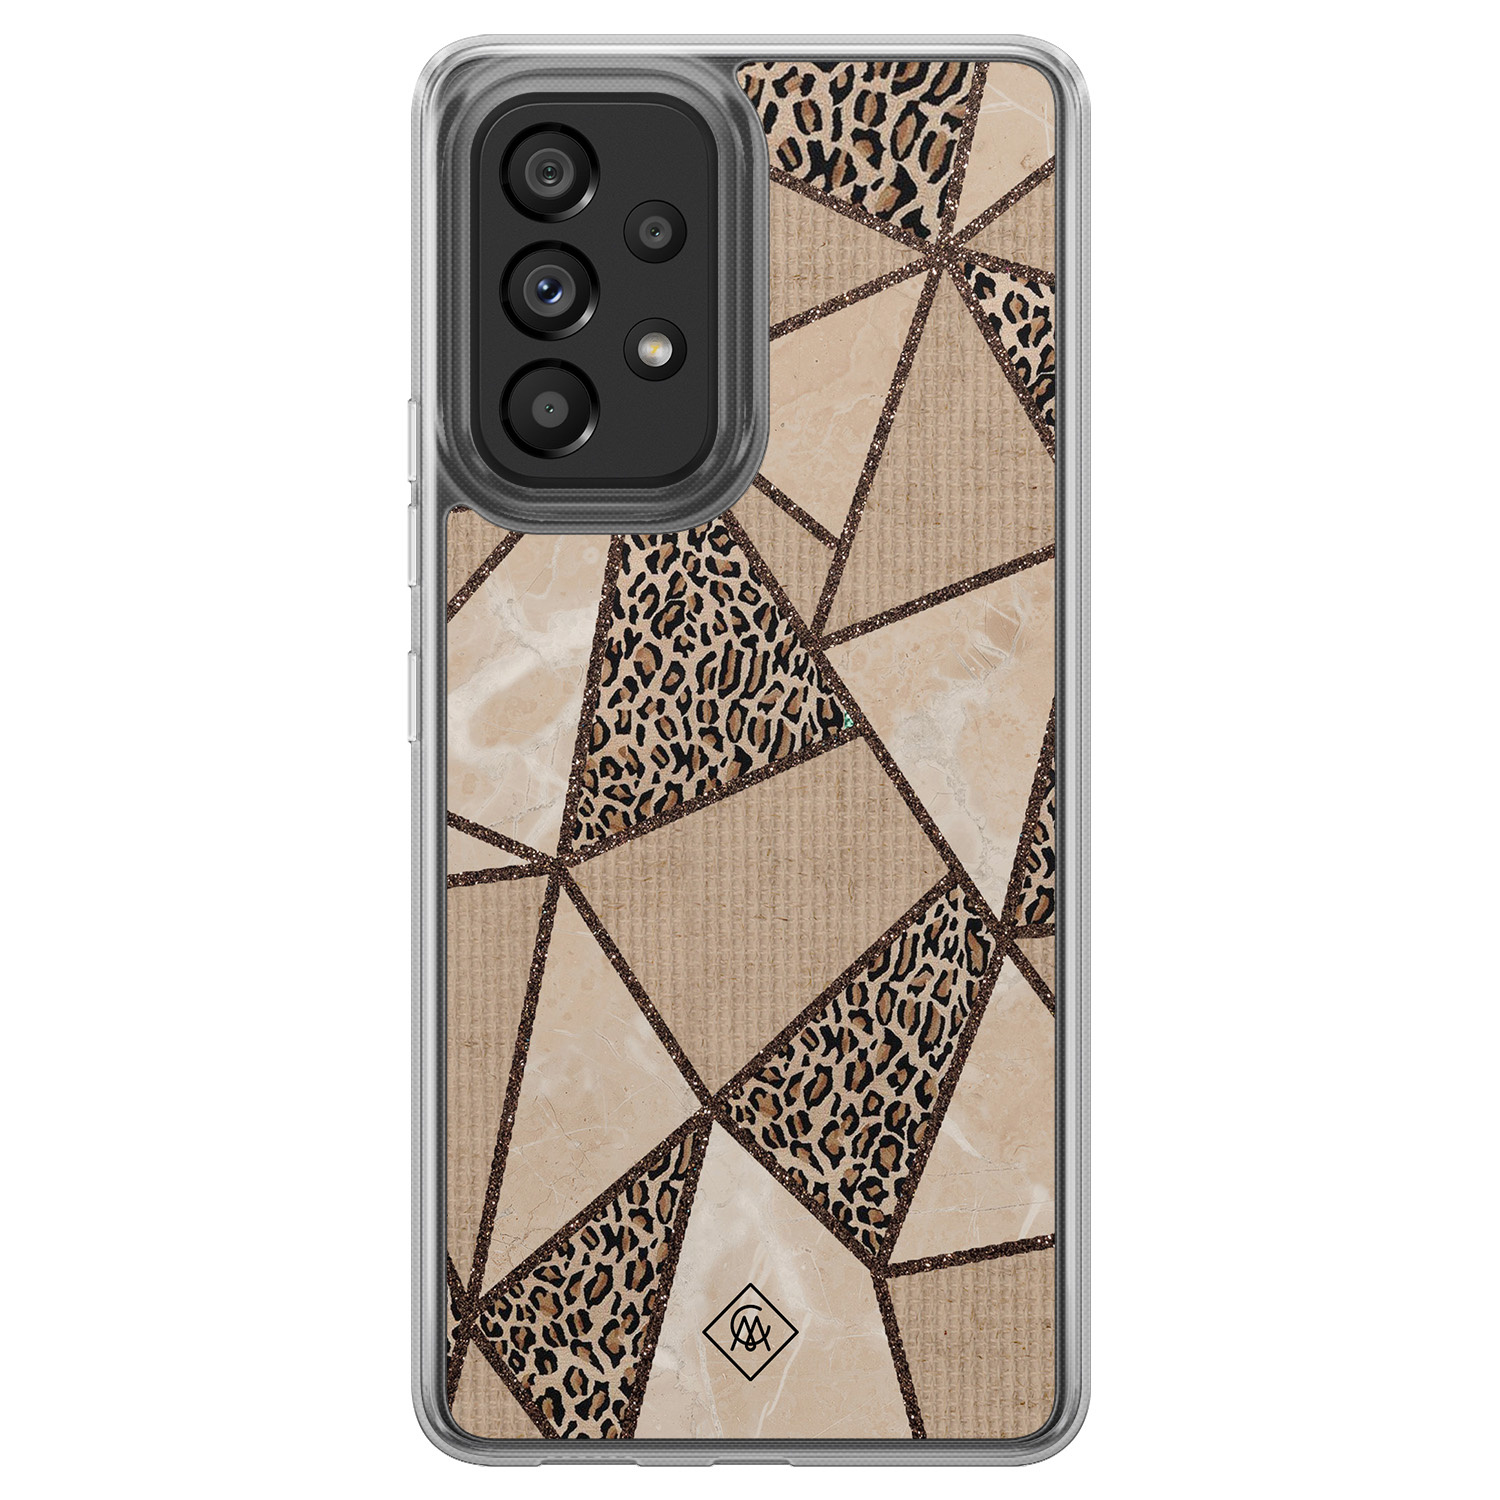 Samsung Galaxy A52 5G hoesje siliconen - Leopard abstract - Casimoda® 2-in-1 case hybride - Schokbestendig - Luipaardprint - Verhoogde randen - Bruin/beige, Transparant